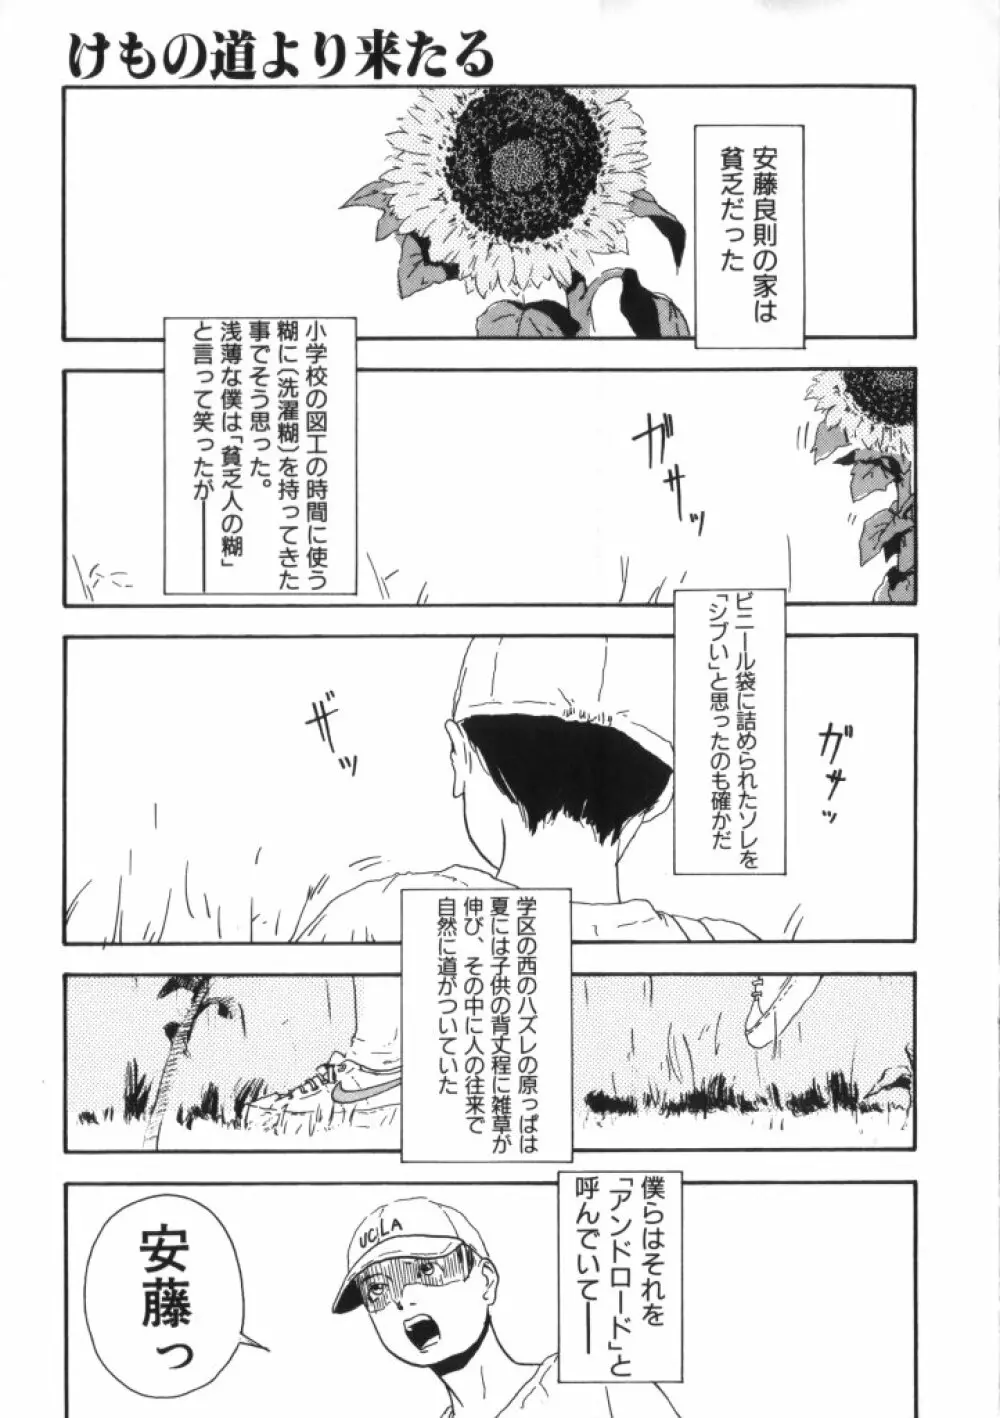 妖精日記 第2号 33ページ